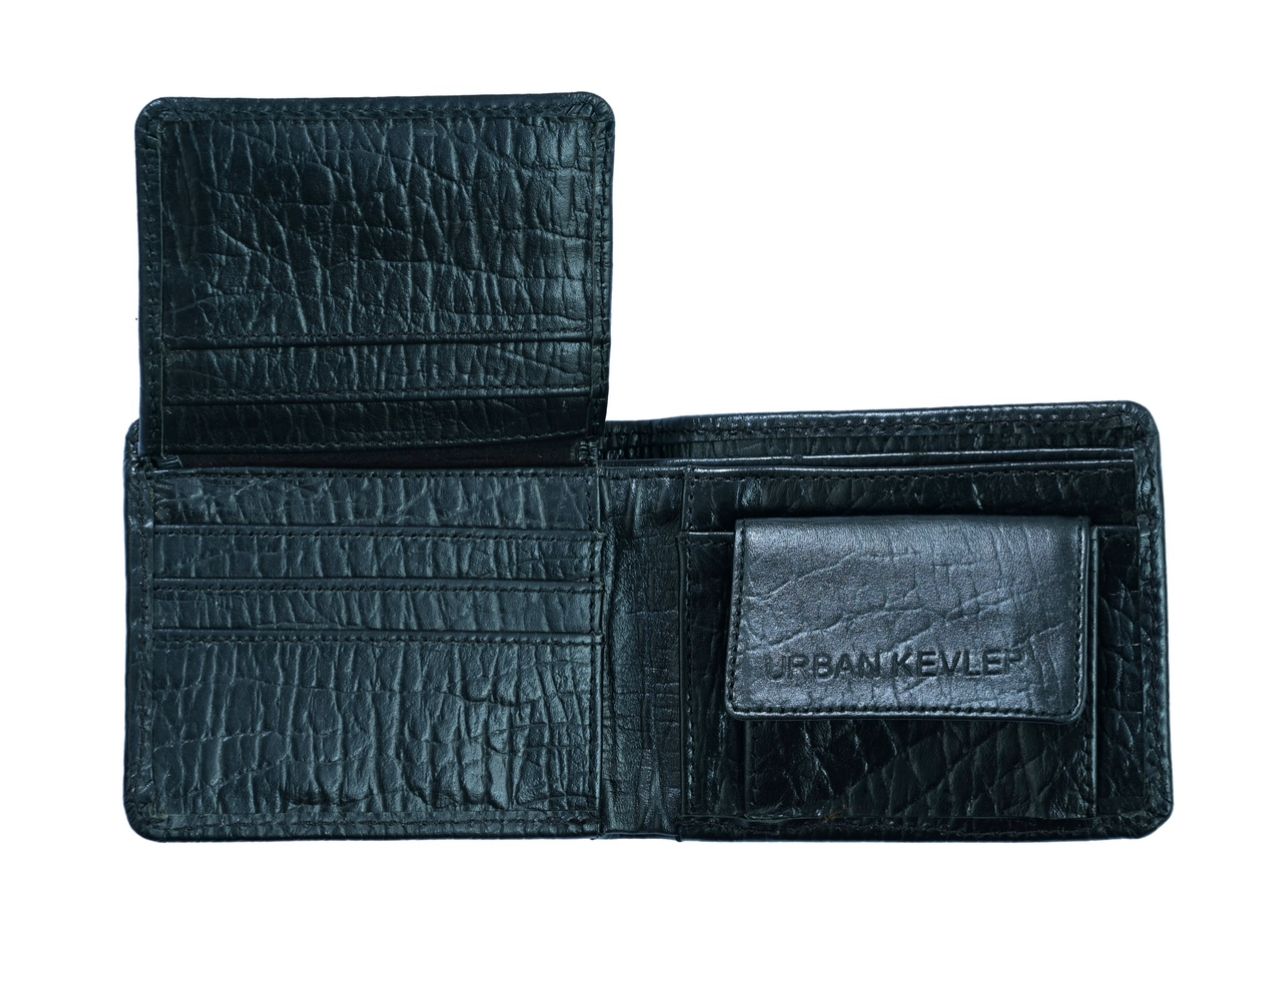 Urban Kevlar Genuine Leather Wallet - Classic Men's Bifold Wallet Crocodile Black